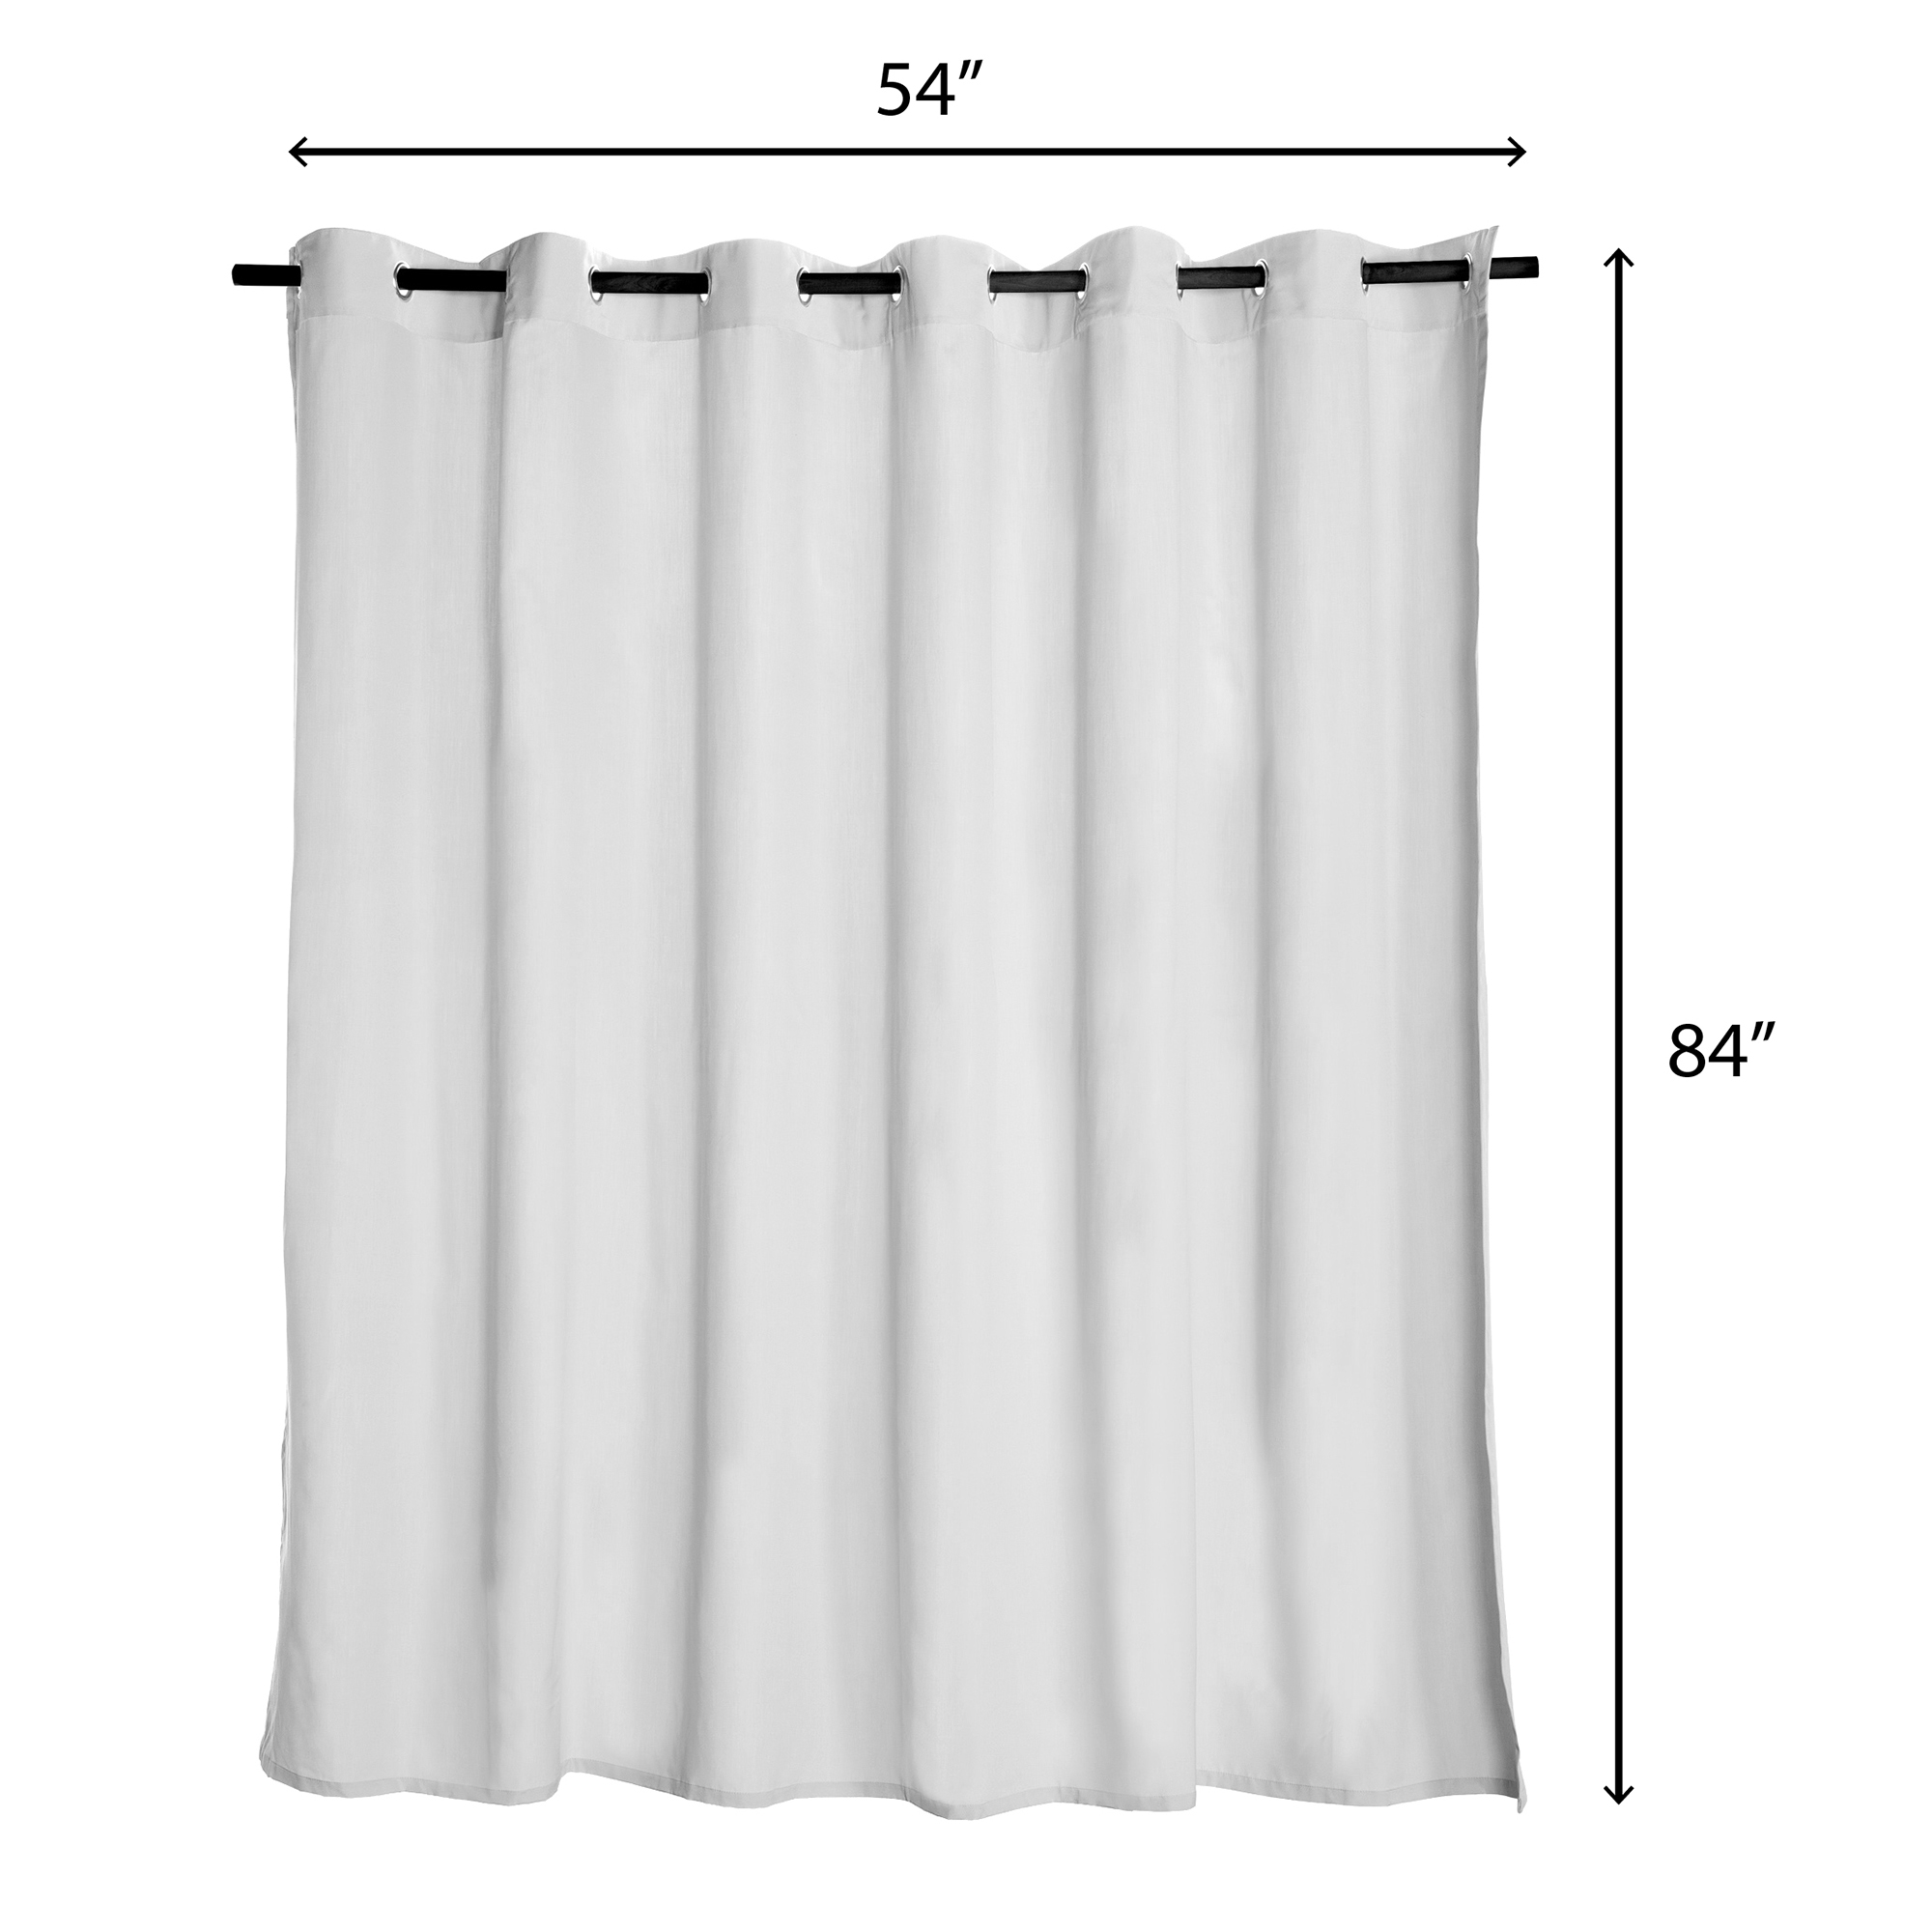 Jordan Manufacturing 54" x 84" Natural Stripe Grommet Semi-sheer Outdoor Curtain Panel (2 Pack) - image 2 of 6